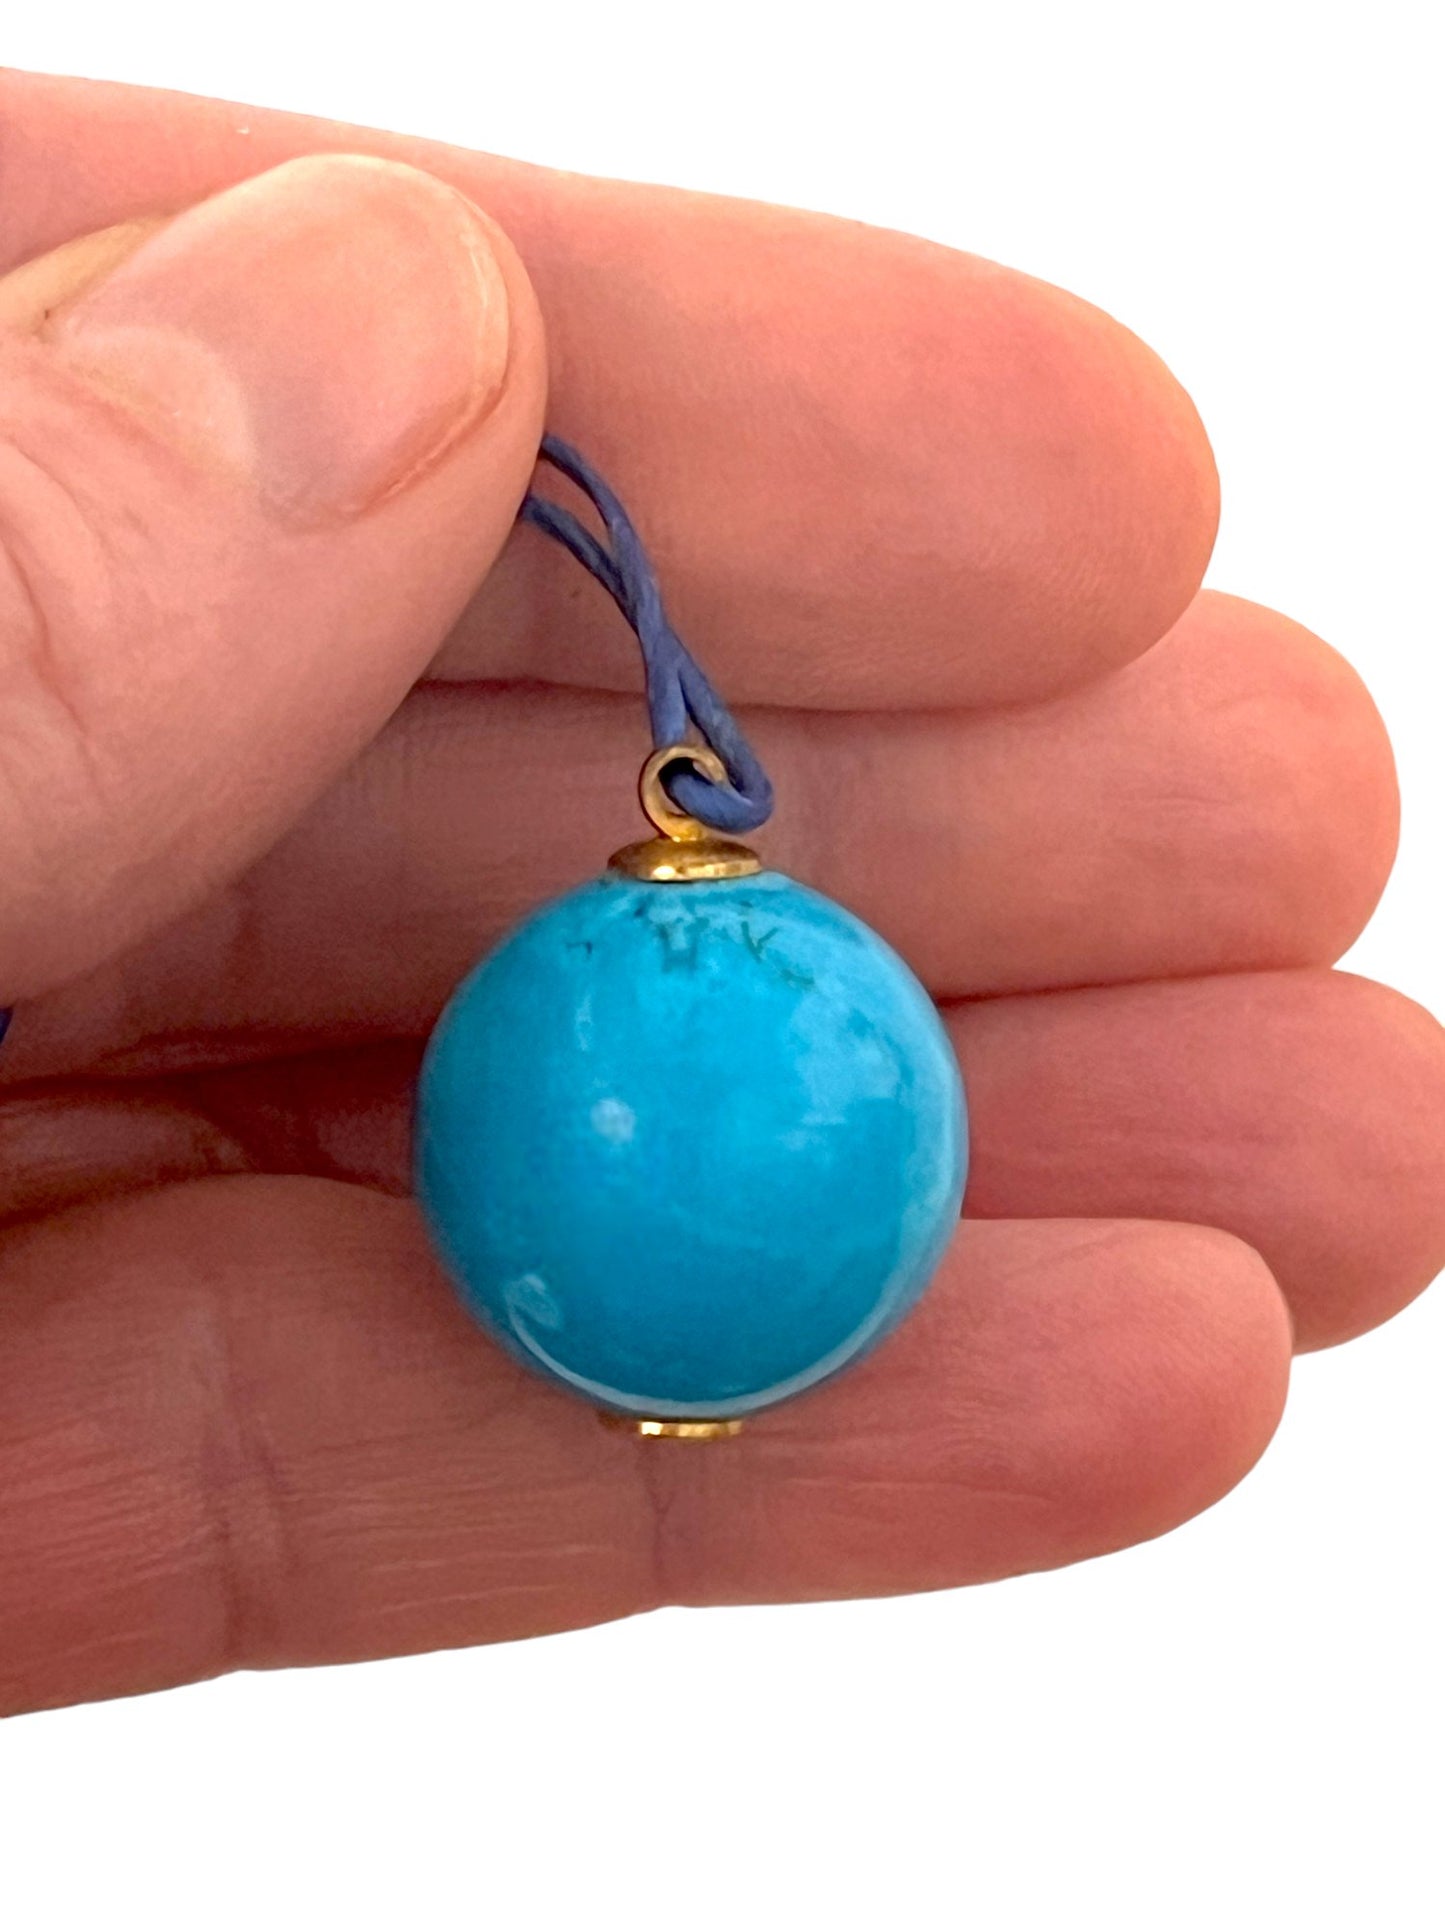 Turquoise howlite ball shaped pendant necklace - Sundara Joon